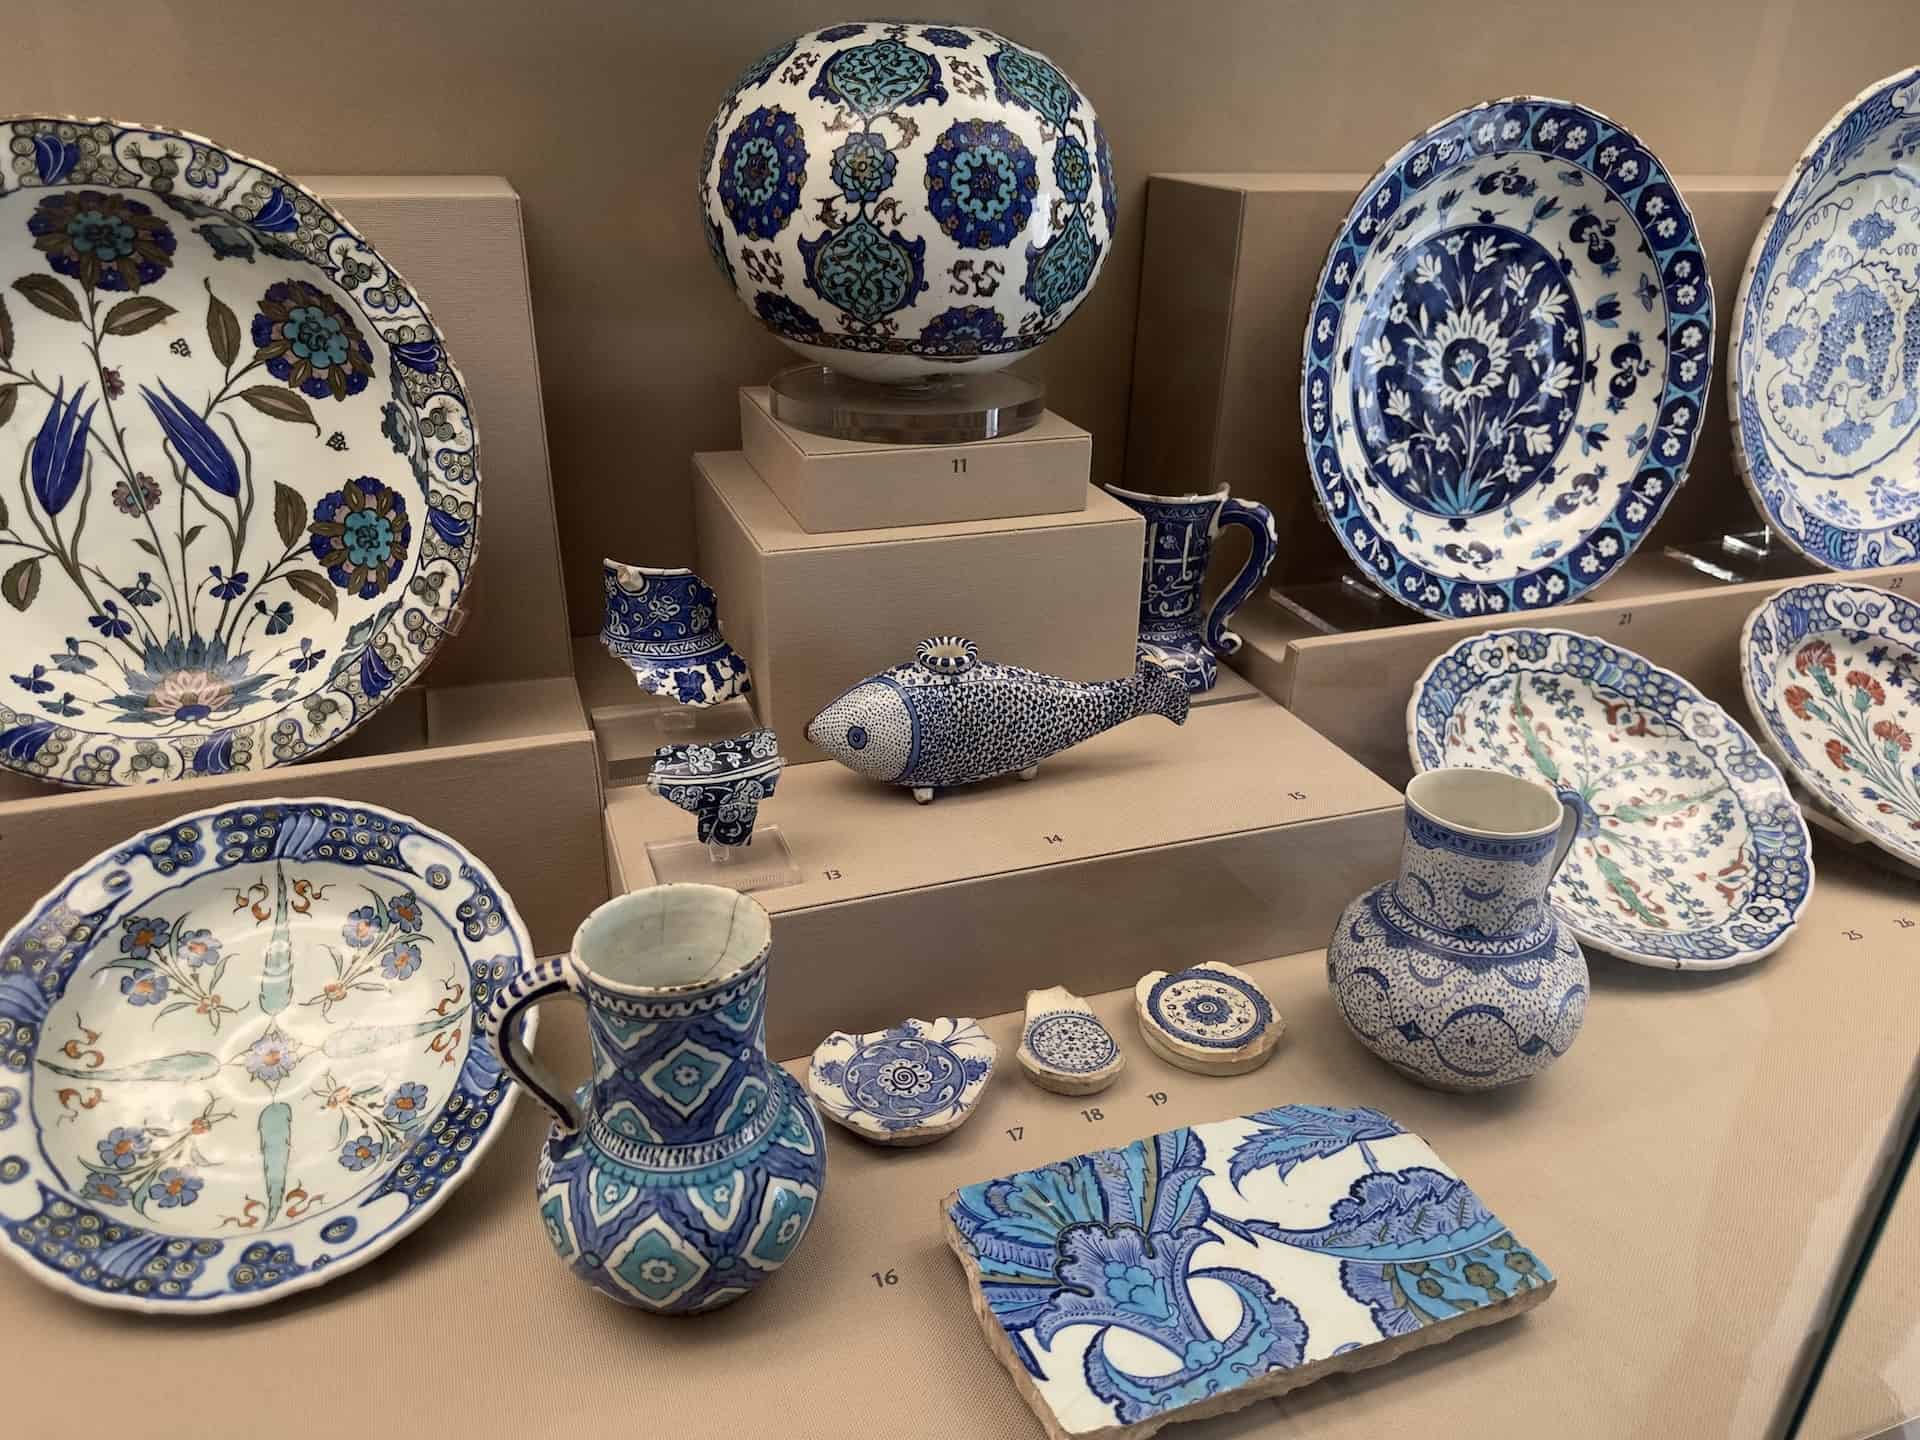 Ottoman ceramic ware; late 15th-16th century at the Benaki Museum of Islamic Art in Athens, Greece